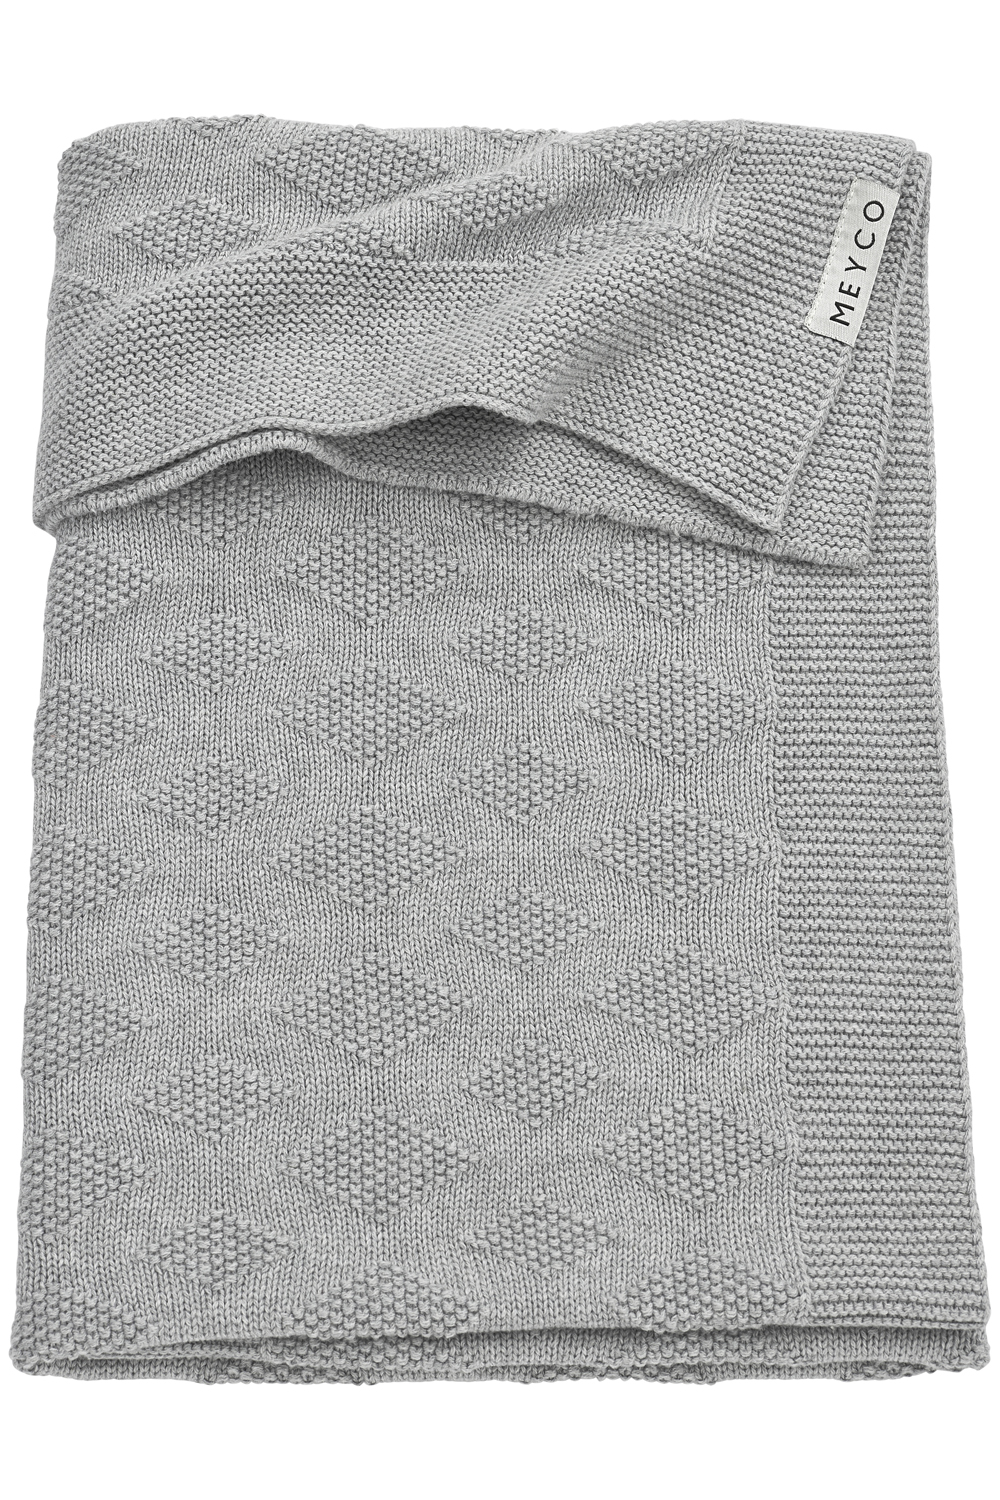 Organic Cot Bed Blanket Diamond - Grey Melange - 100x150cm